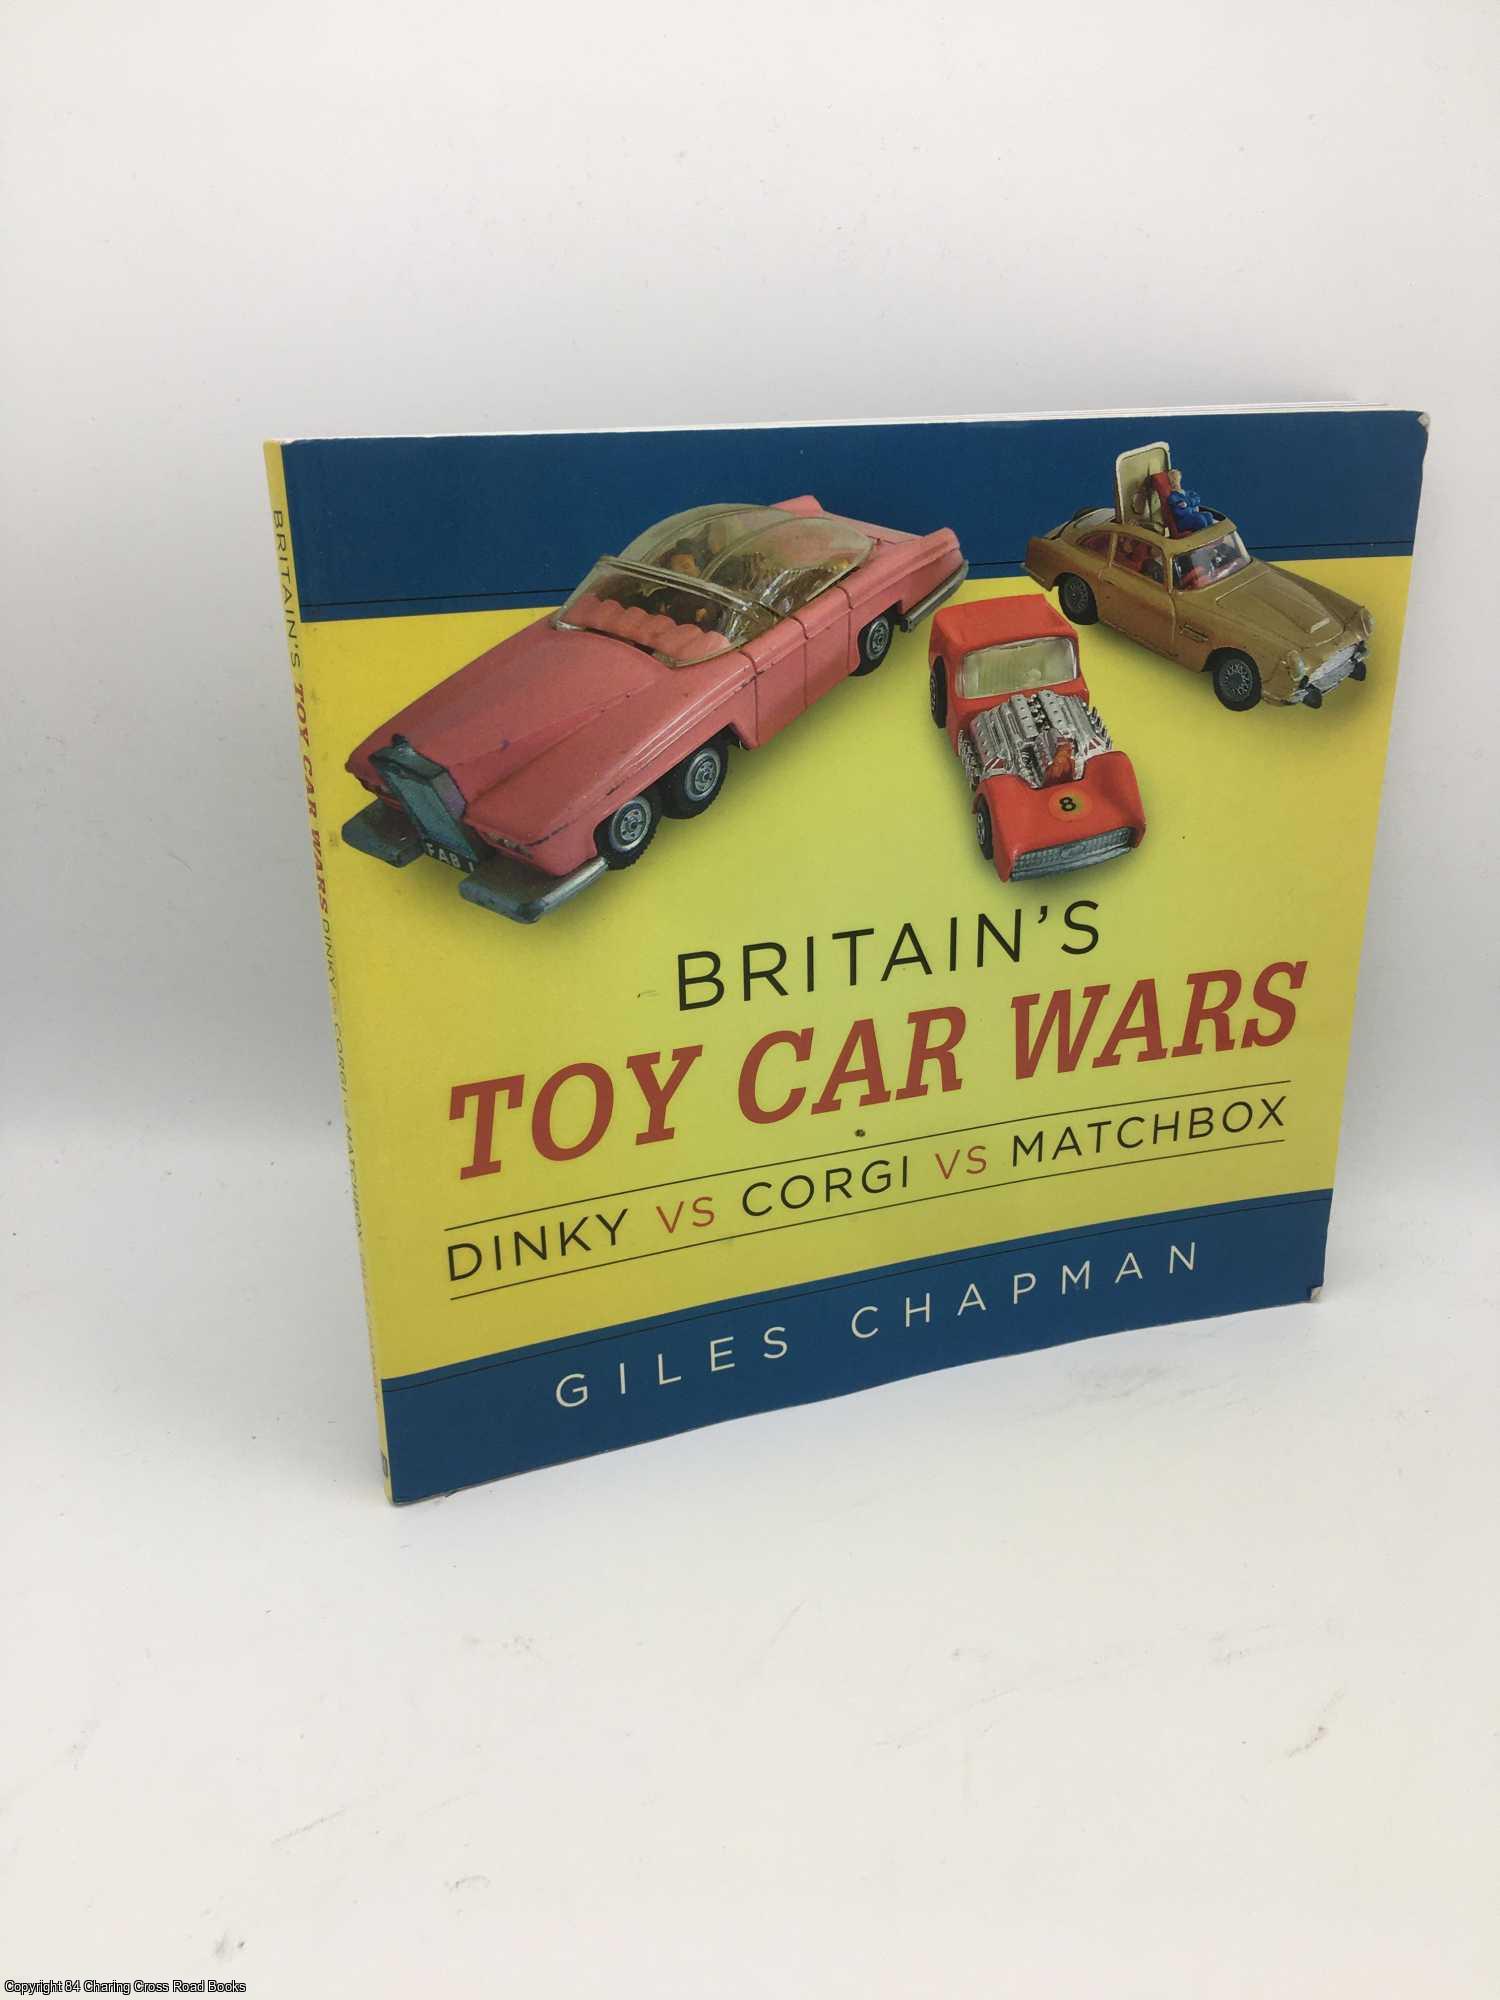 Chapman, Giles - Britain's Toy Car Wars: Dinky vs Corgi vs Matchbox